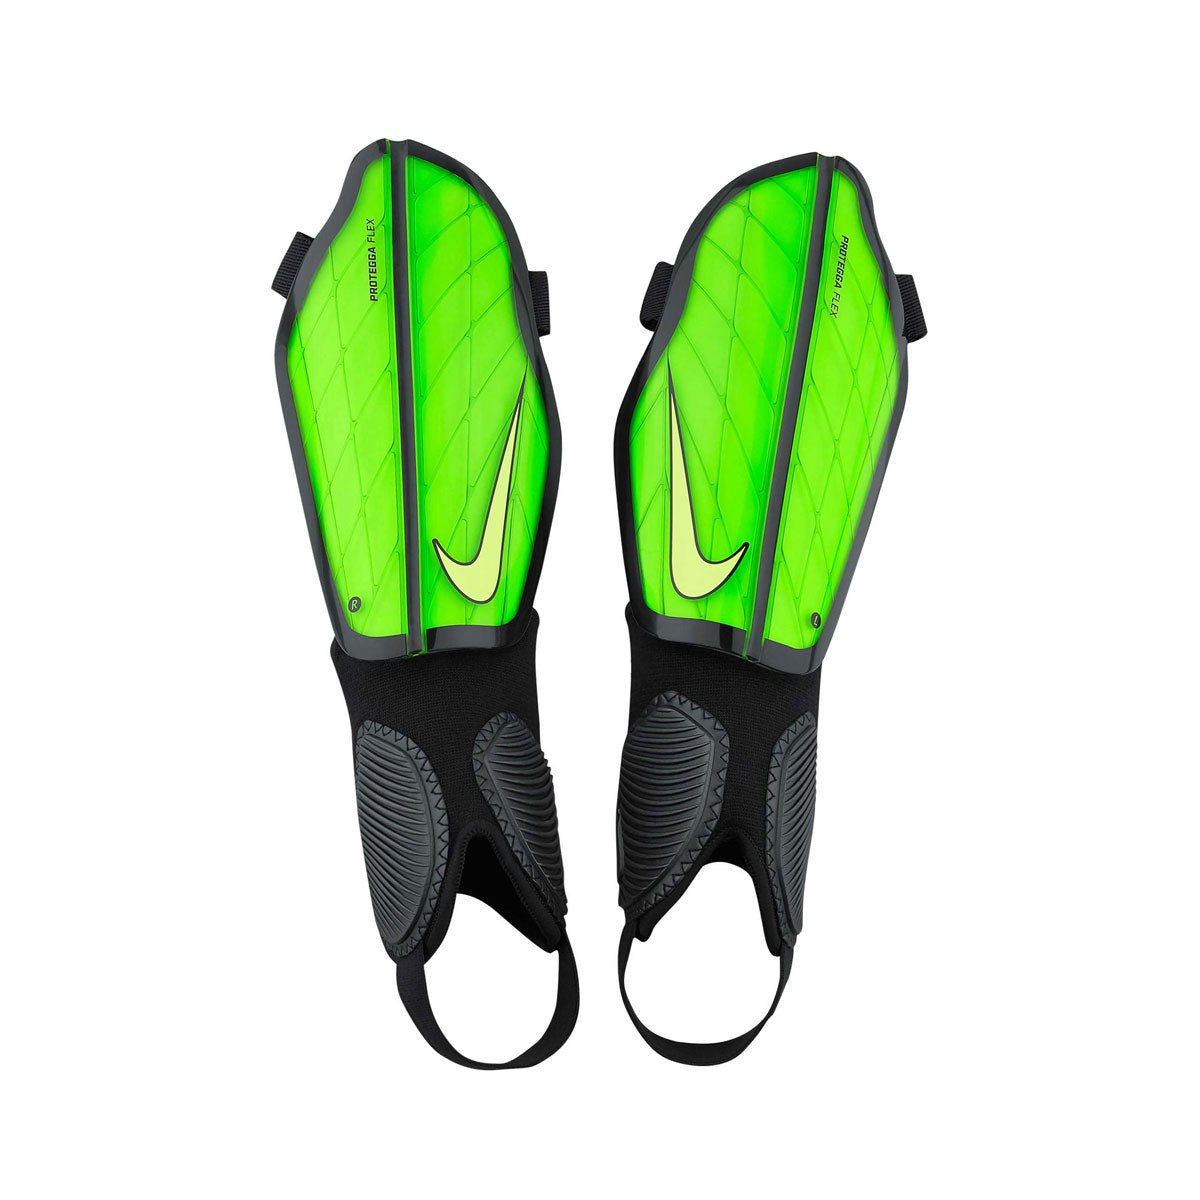 Nike Adult Protegga Flex Soccer Shinguard Electric Green Volt SP0313-336